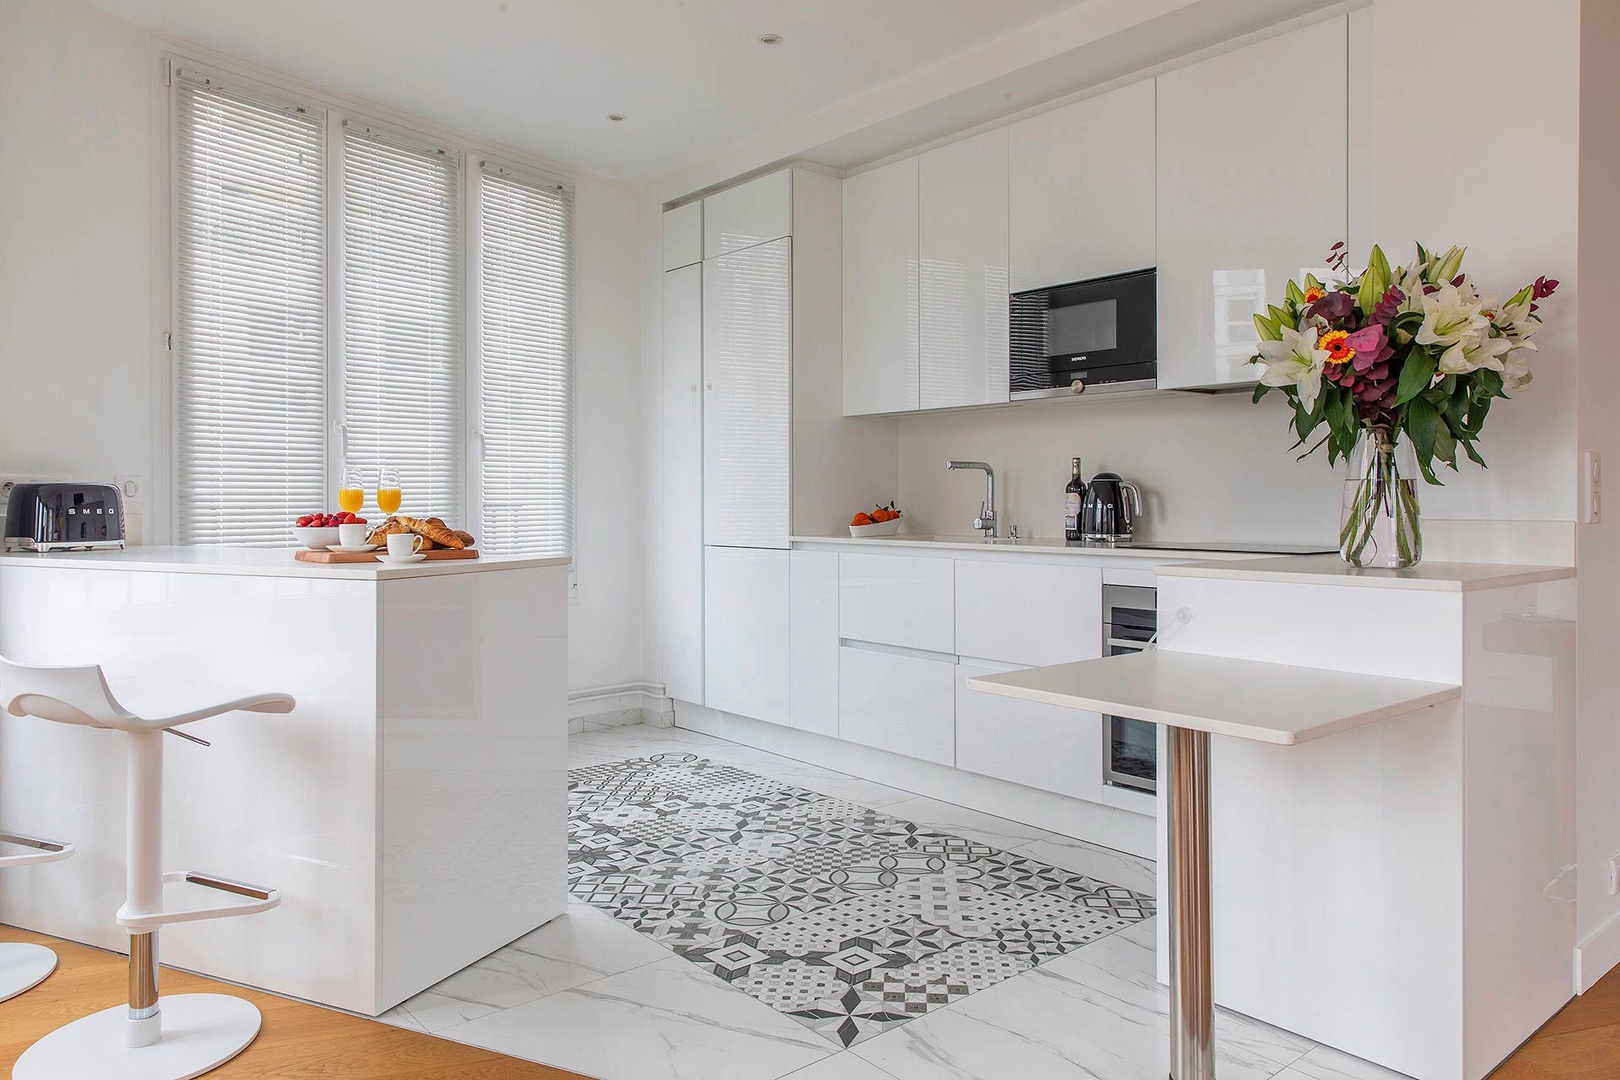 Spacious kitchen with sleek white cabinets.